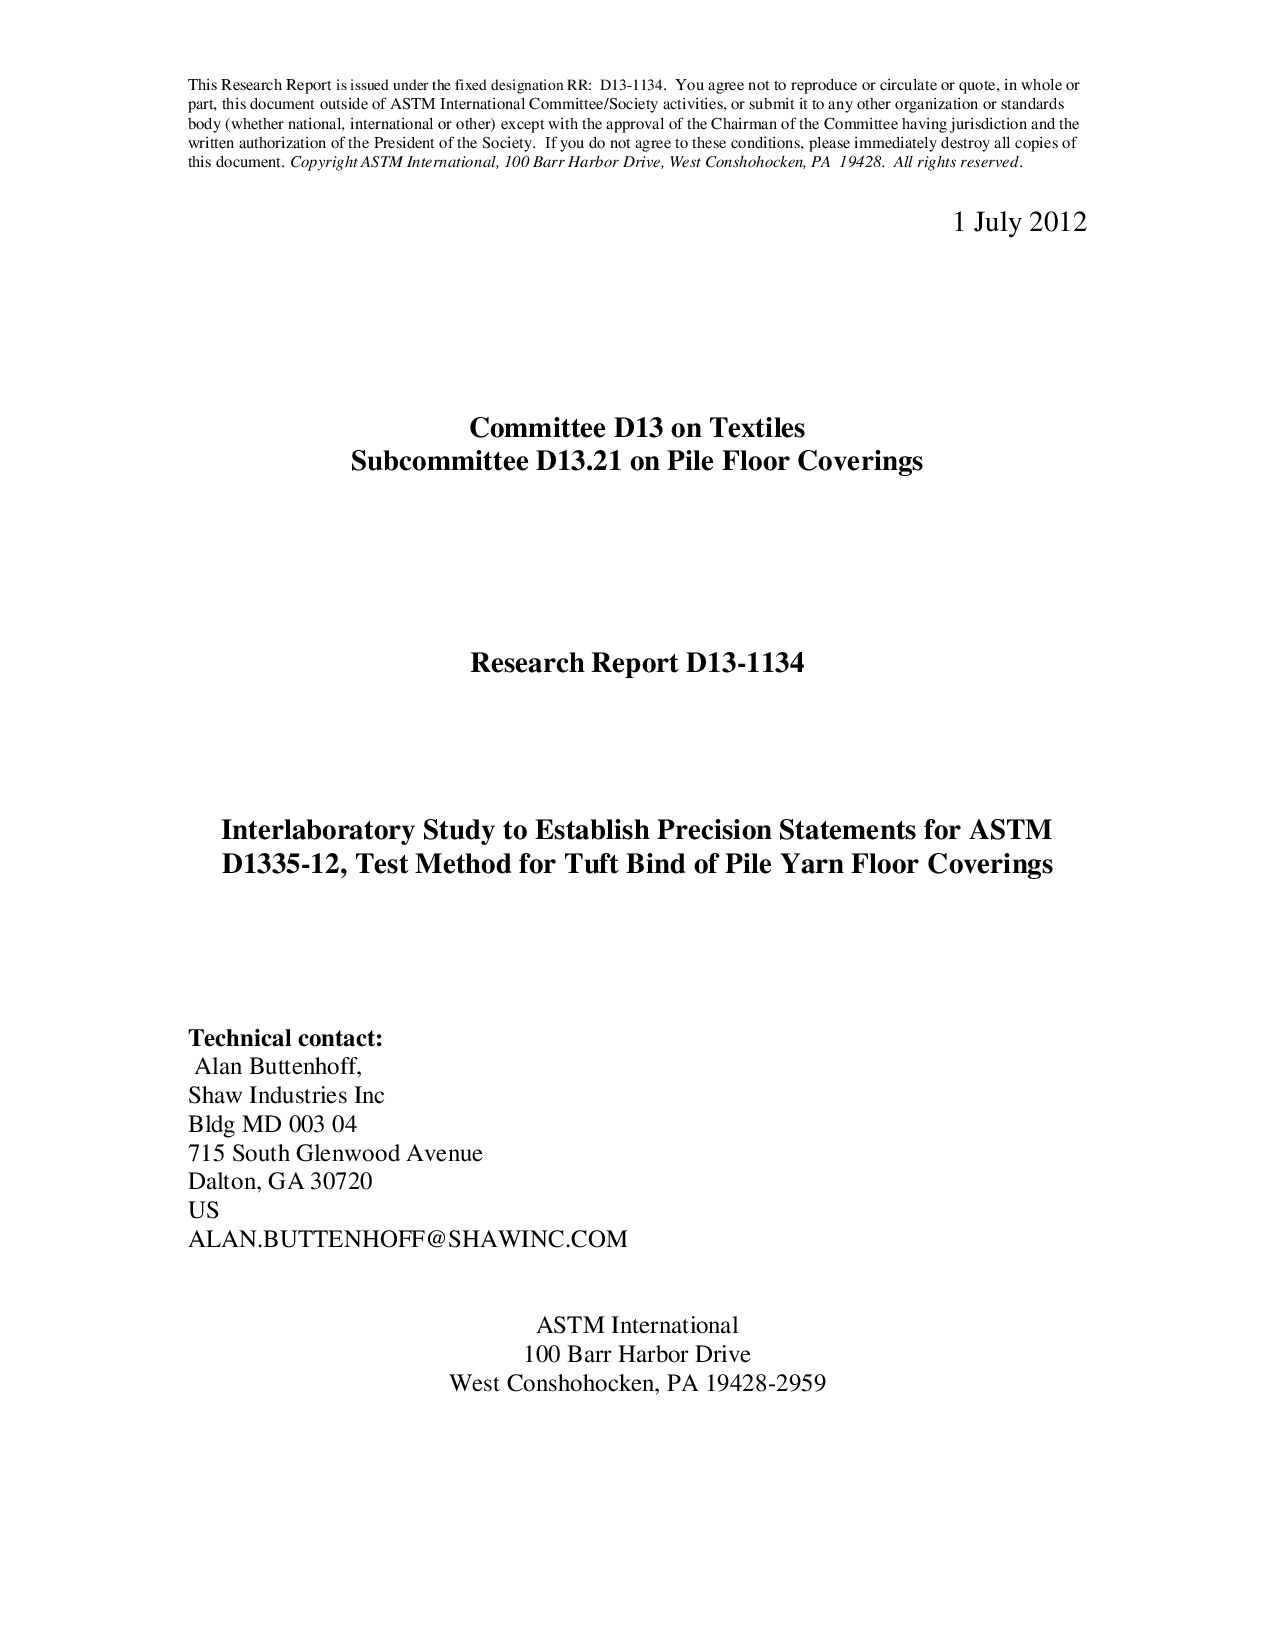 ASTM RR-D13-1134 2012封面图